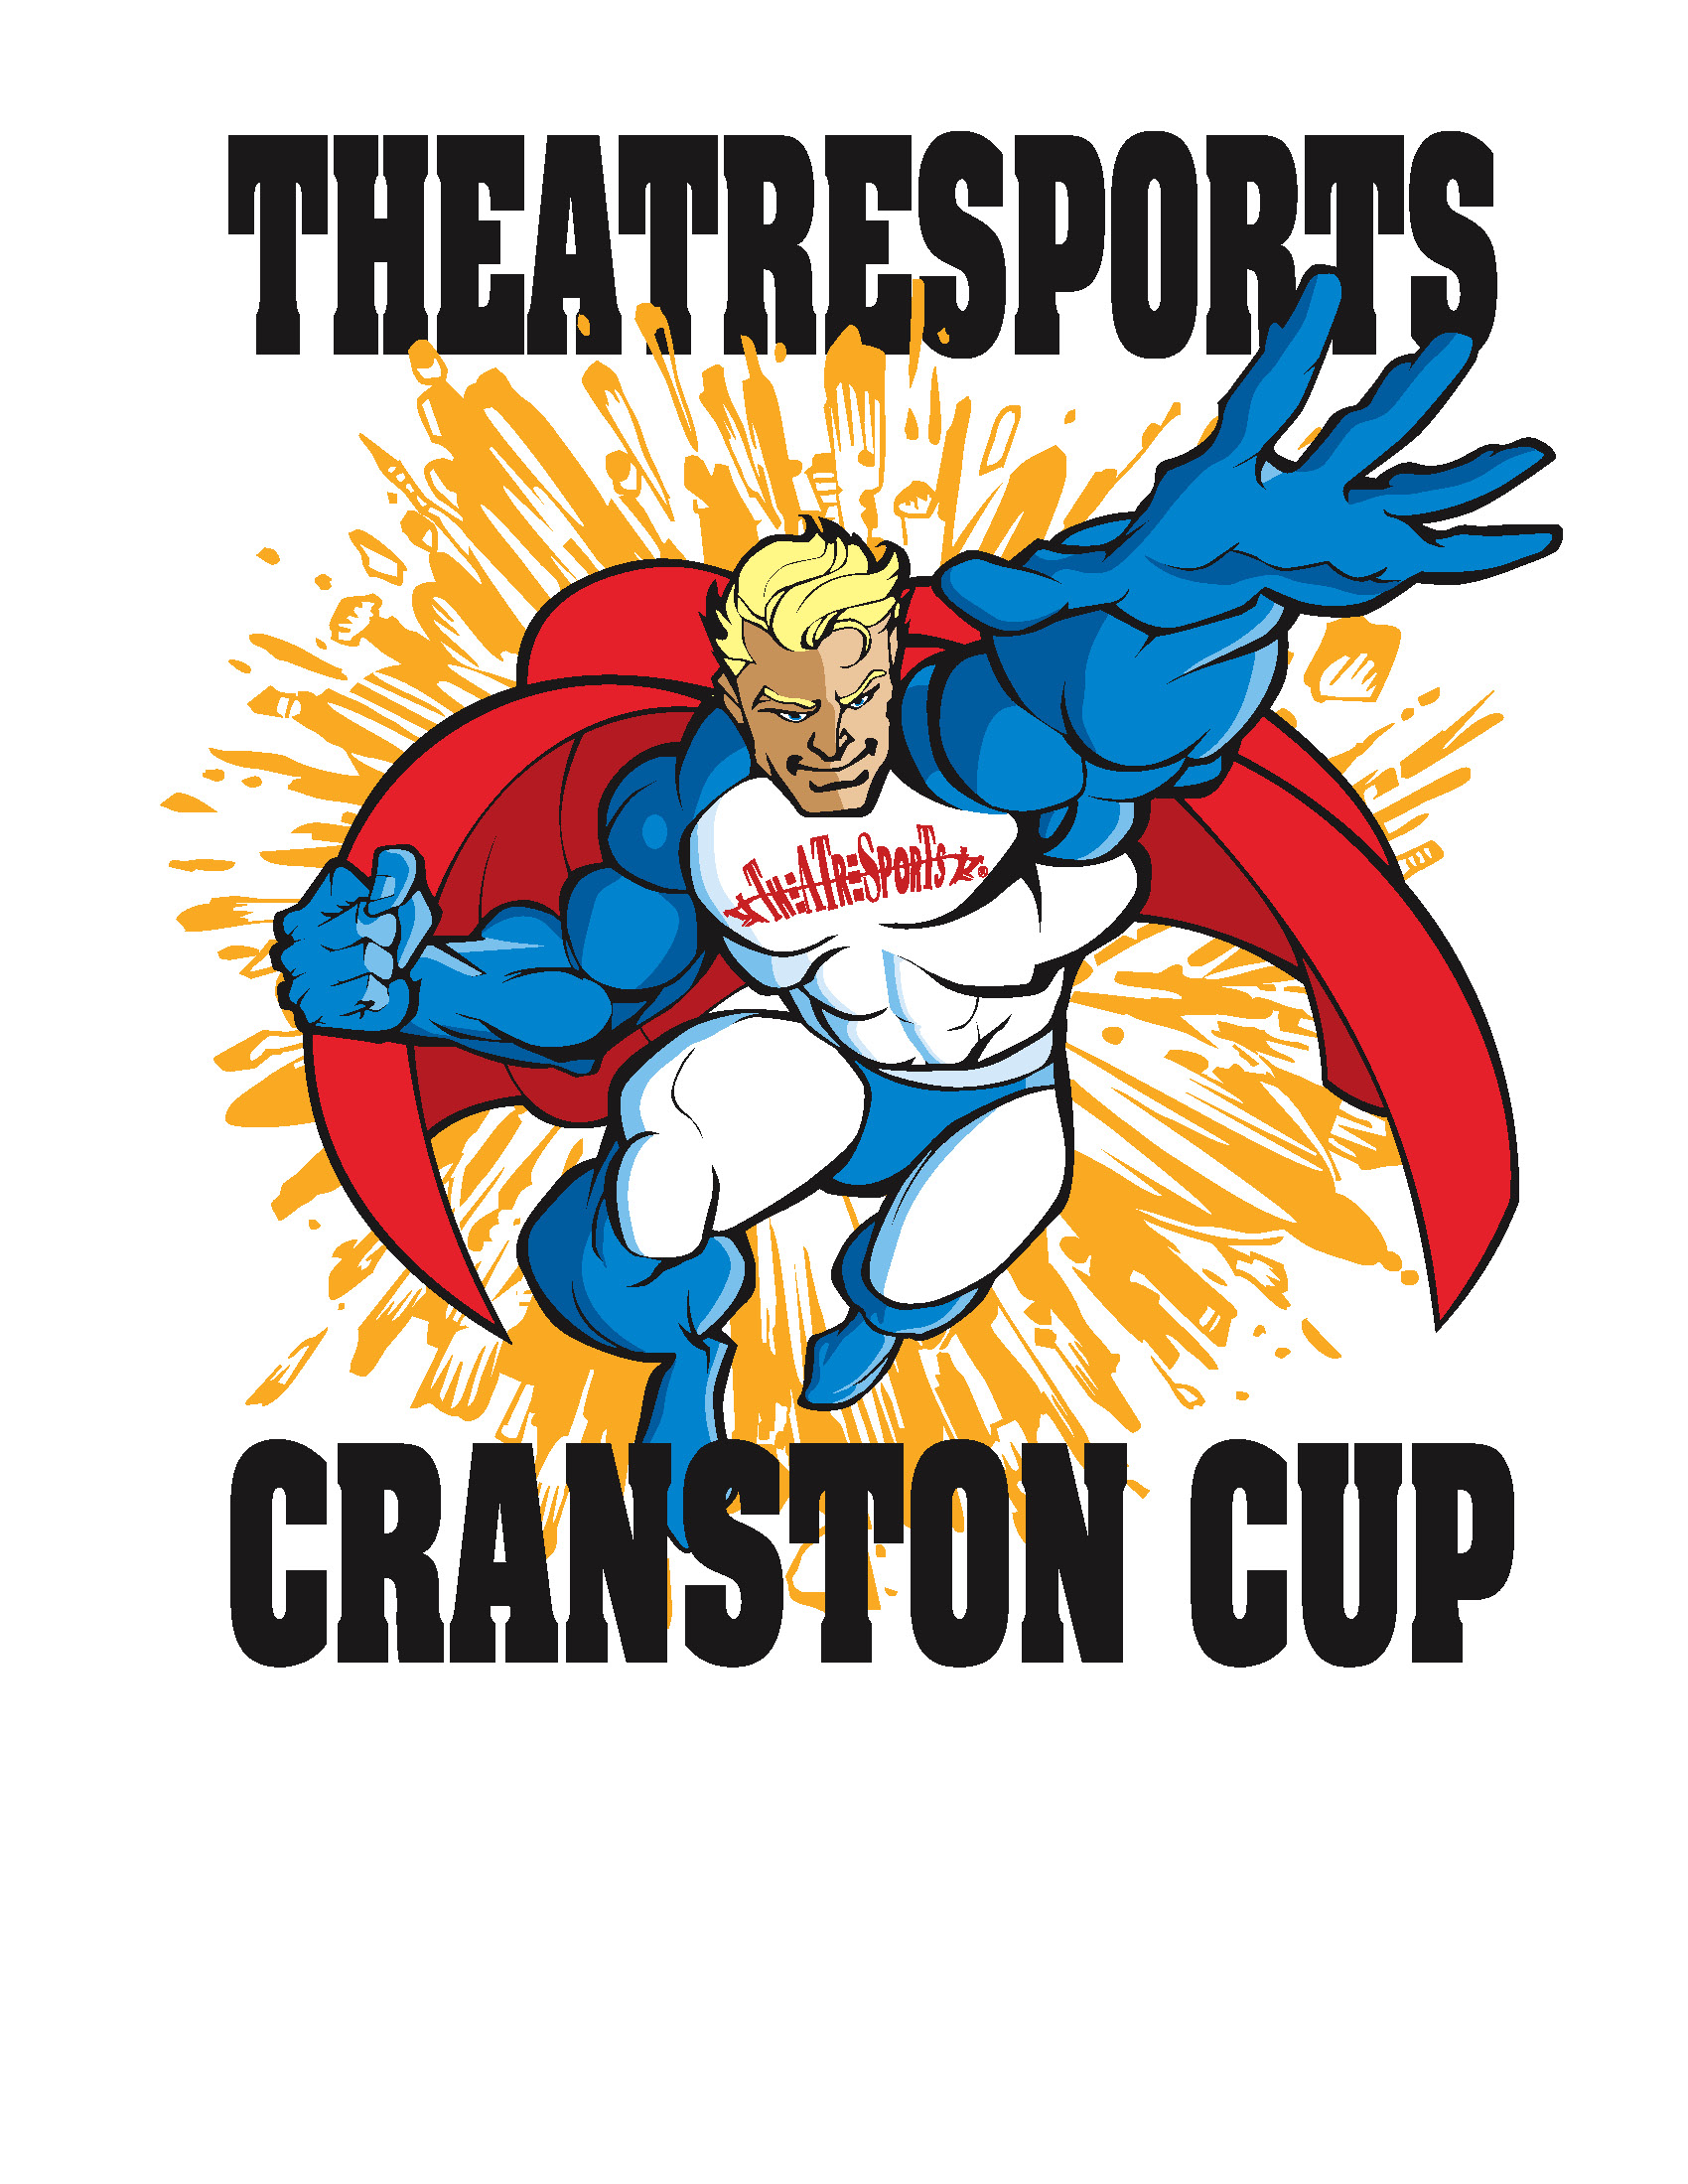 Cranston Cup Superhero with Theatresports stretch logo on chest.jpg